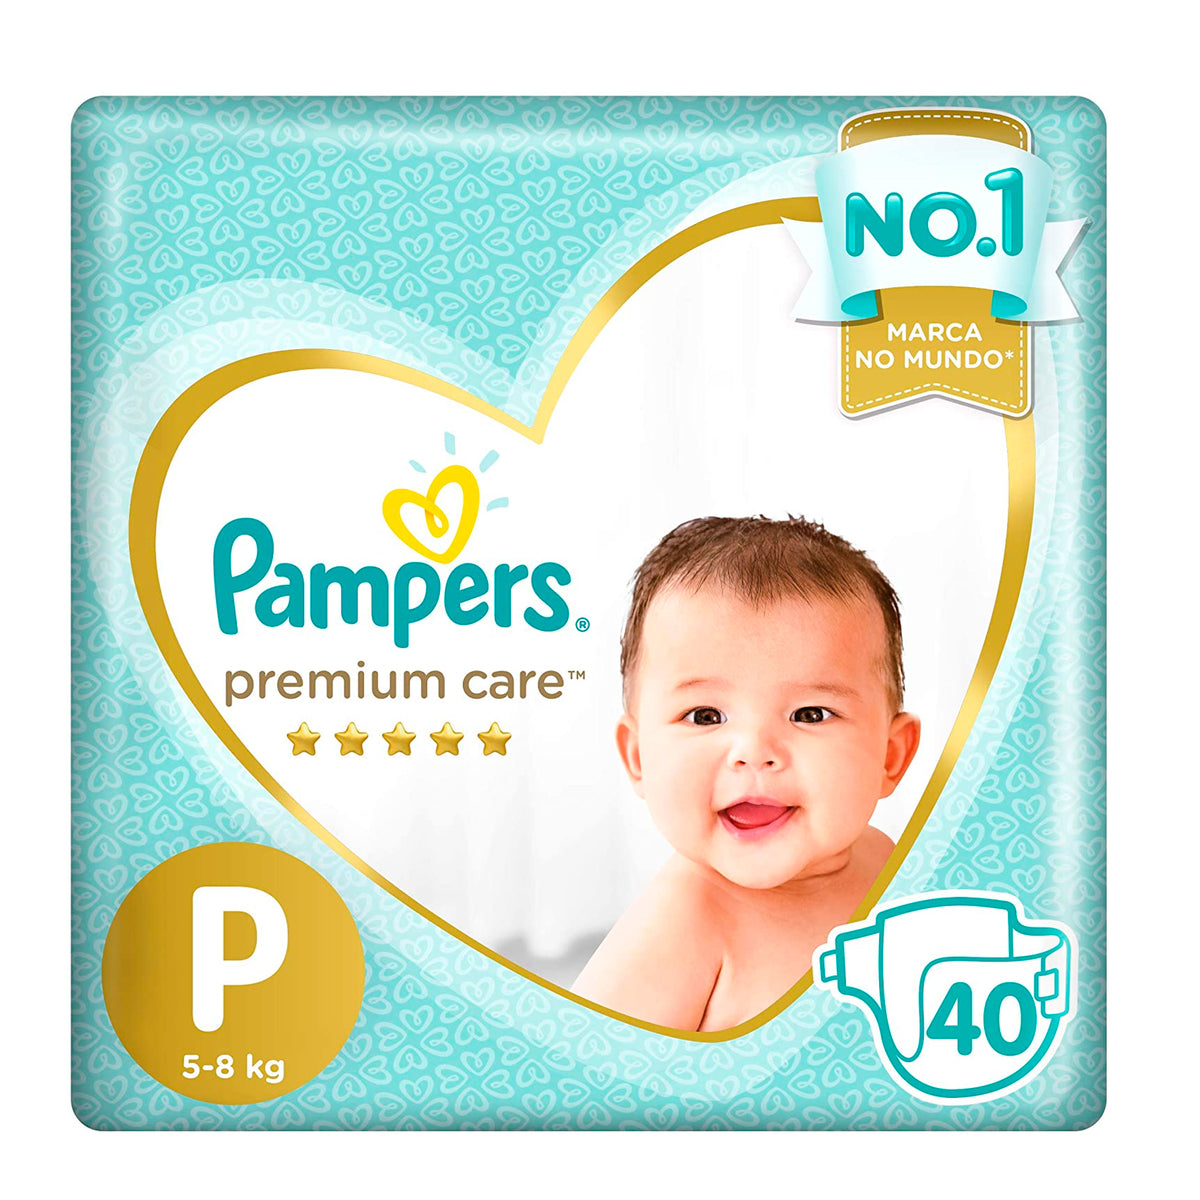 Pampers Premium Care recién nacido x 36 (hasta 4kg)